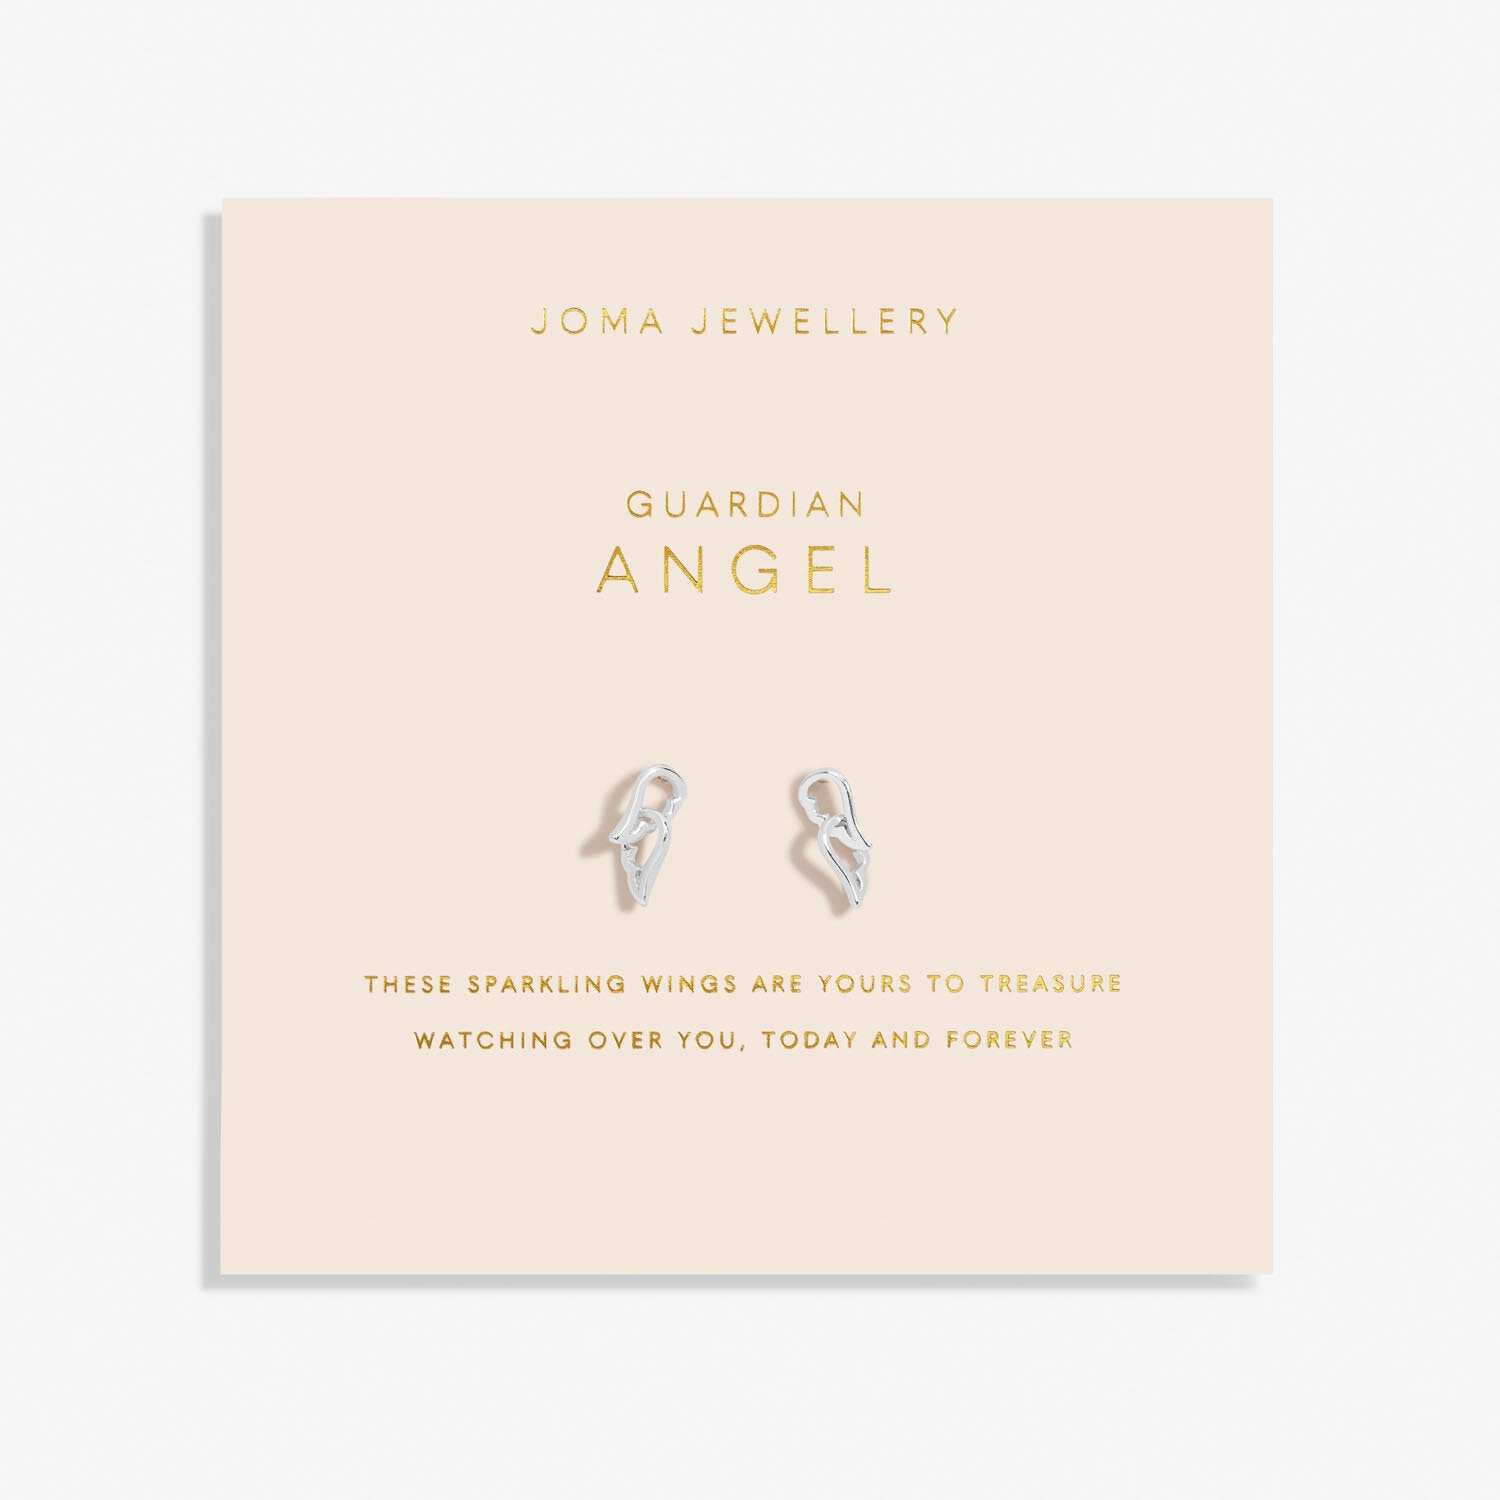 Forever Yours 'Guardian Angel' Earrings - Joma Jewellery